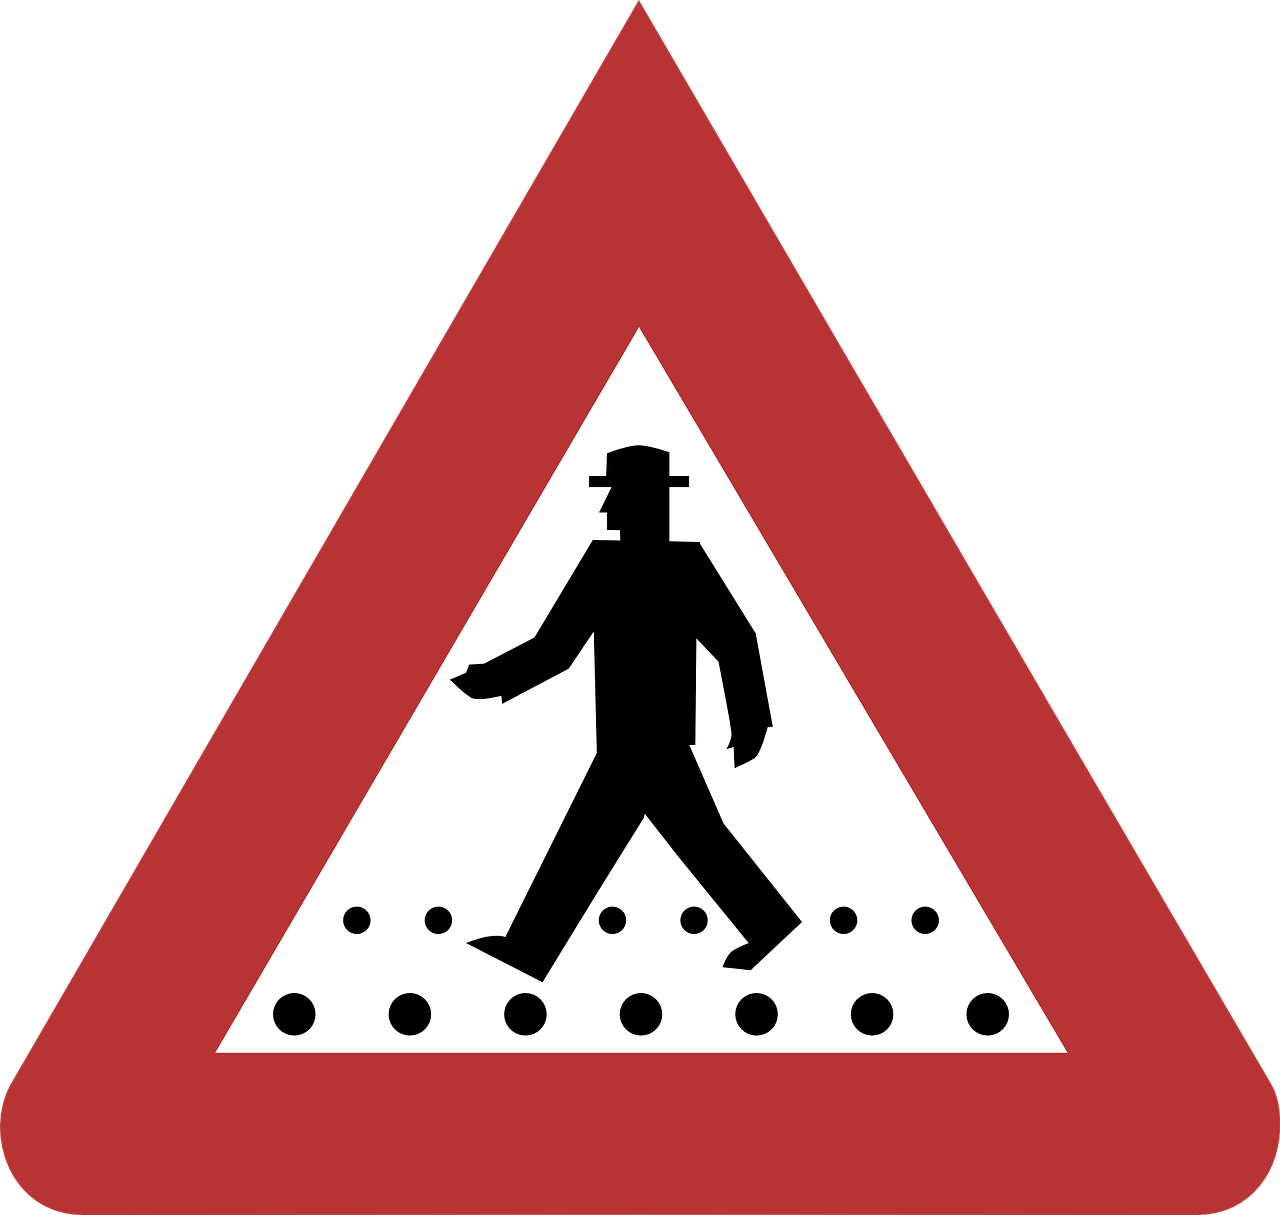 warning pedestrian crossing road sign free photo